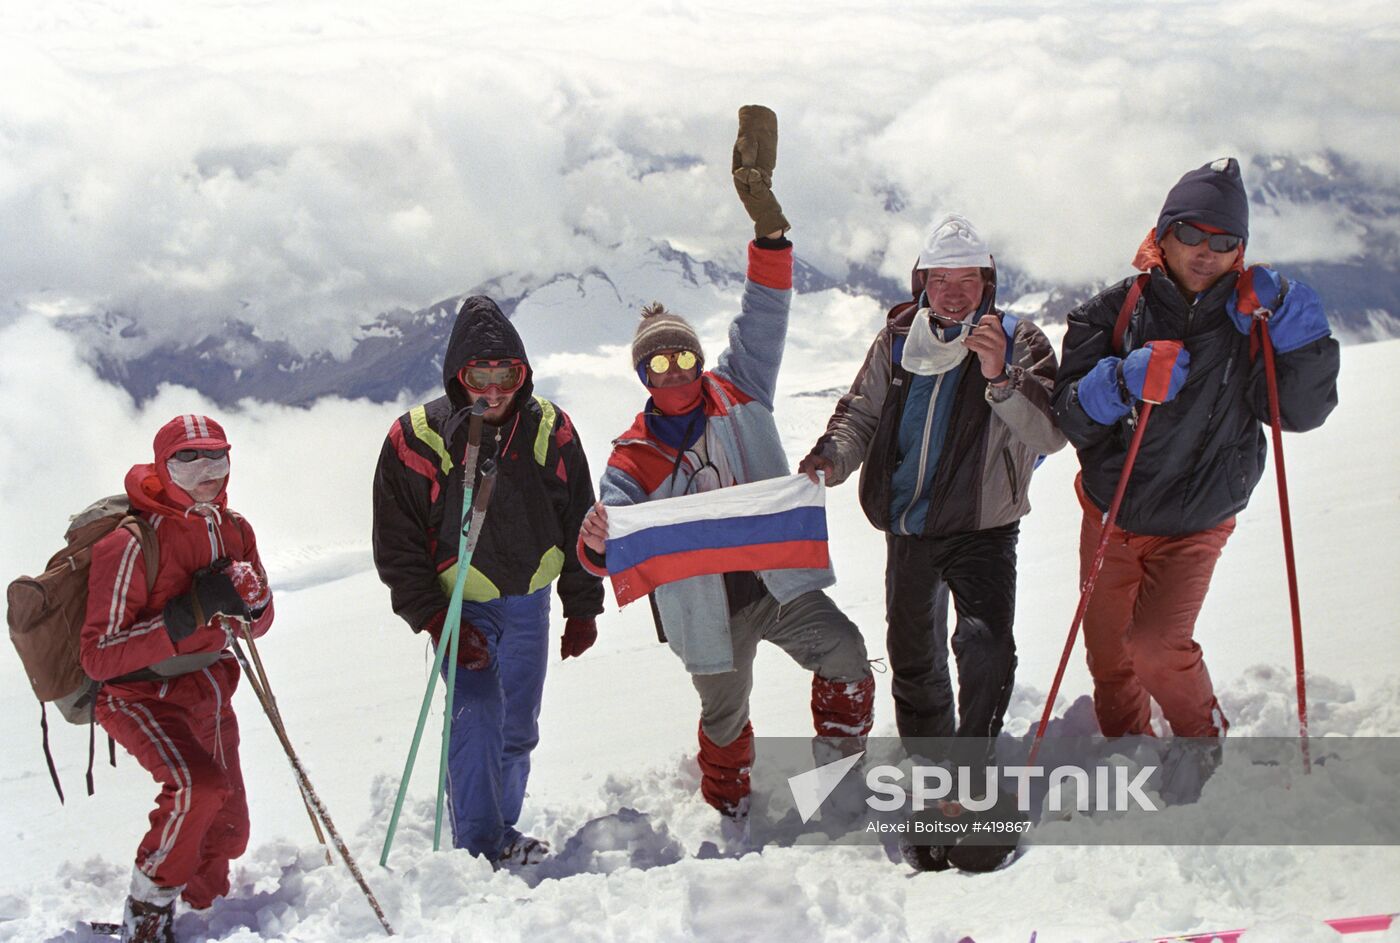 Marathon participants atop Elbrus mountain